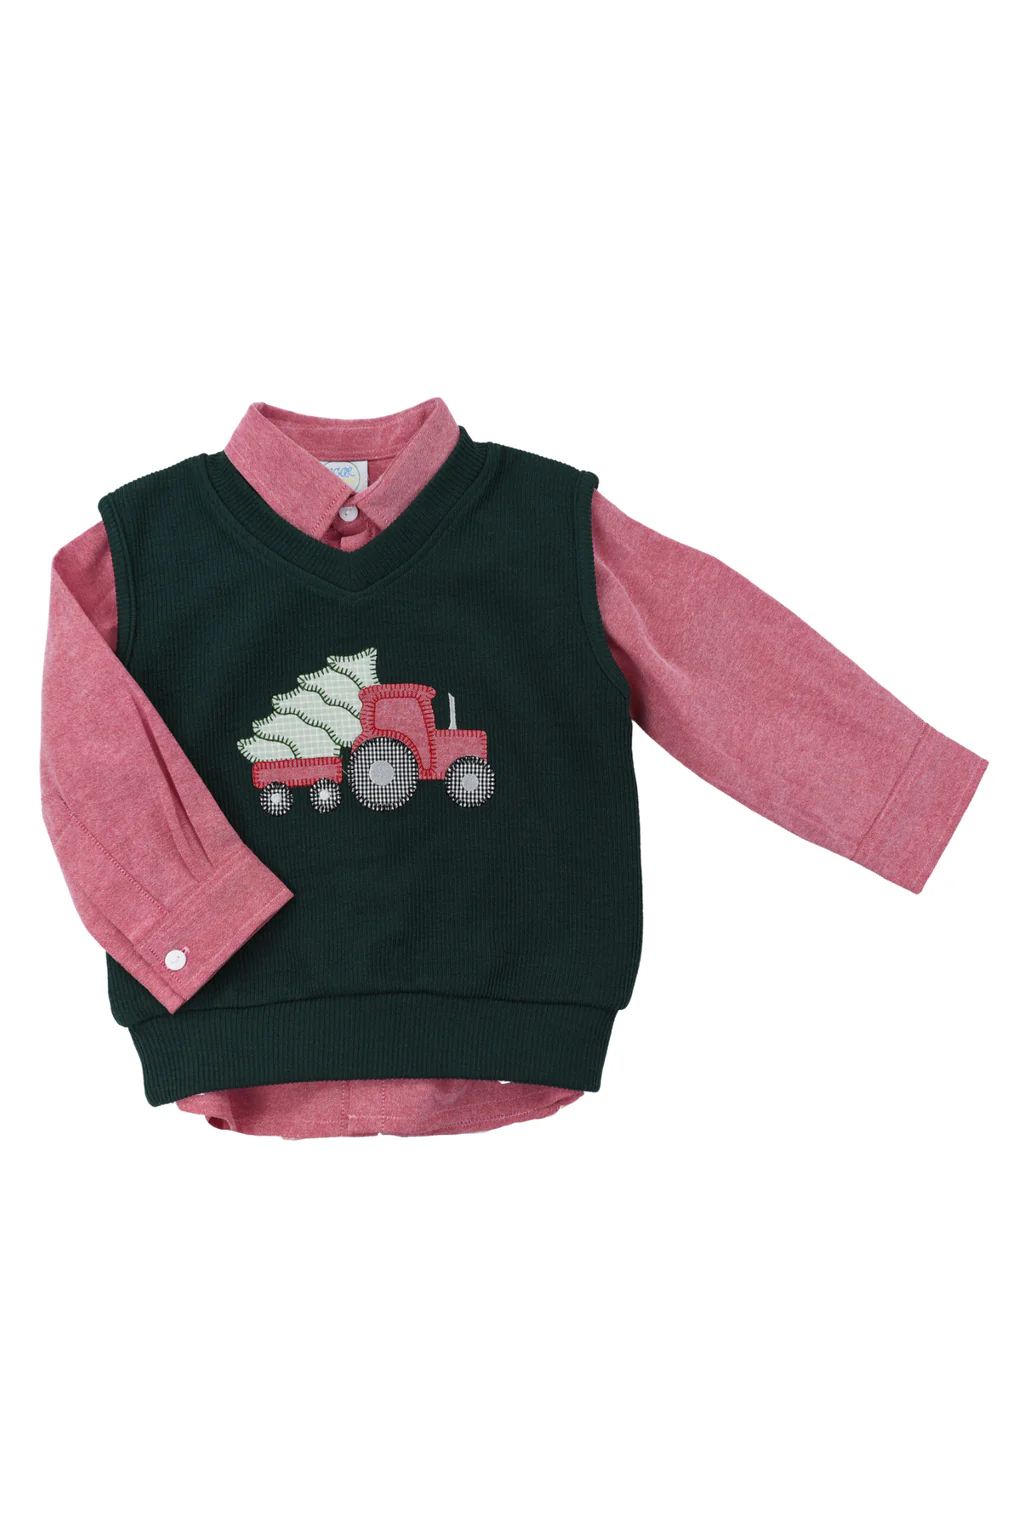 Boys Tractor Sweater Vest &amp; Shirt | Sugar Dumplin' Kids